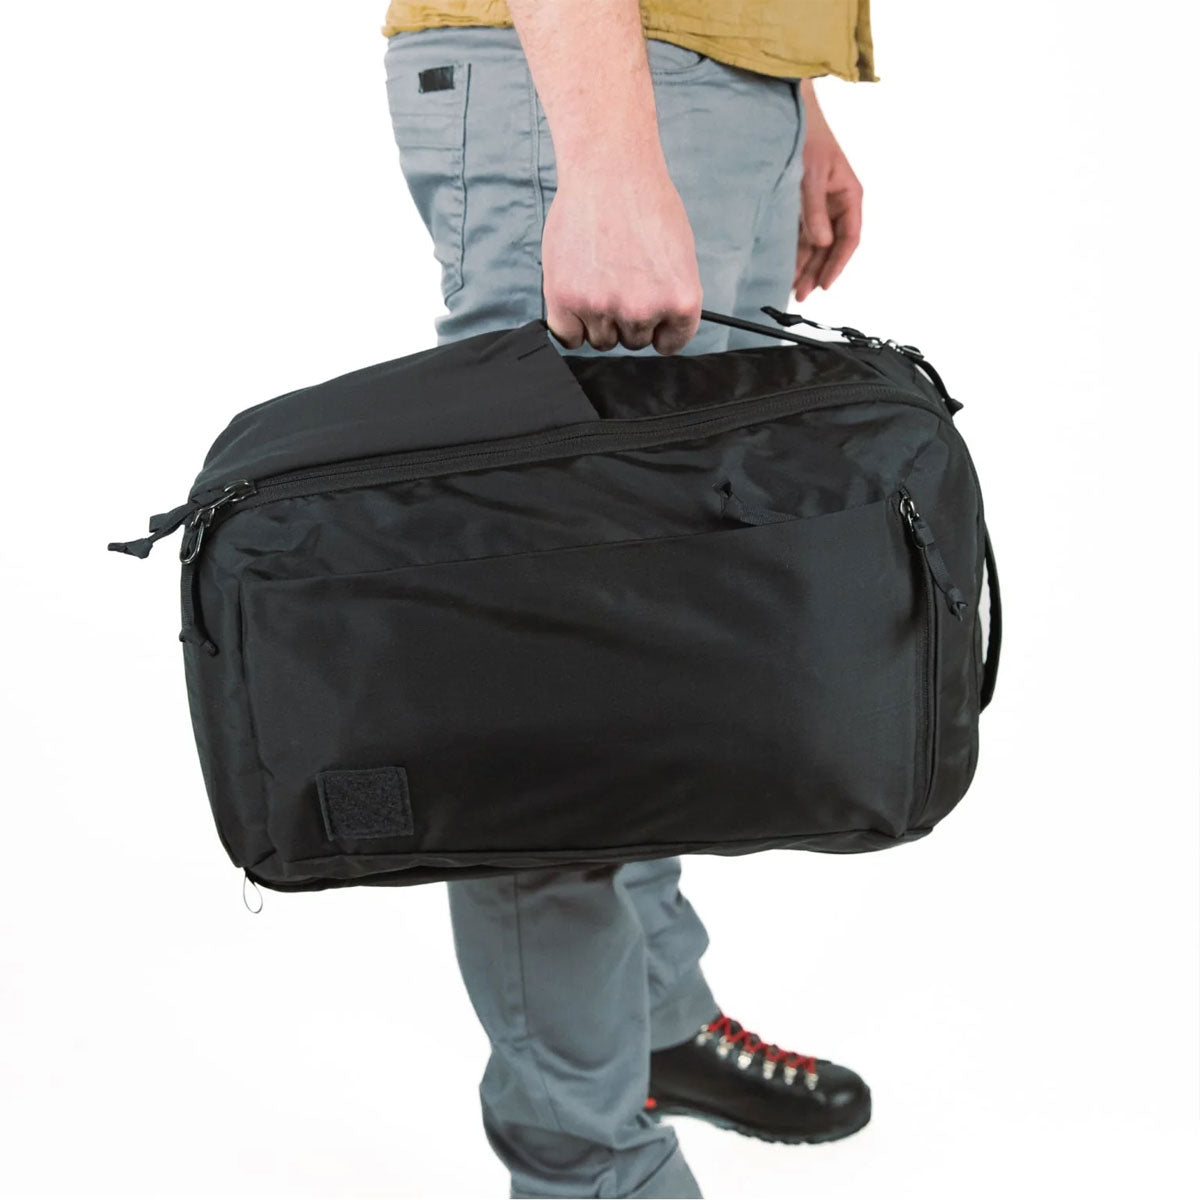 EVERGOODS : Civic Travel Bag 26L : Solution Black